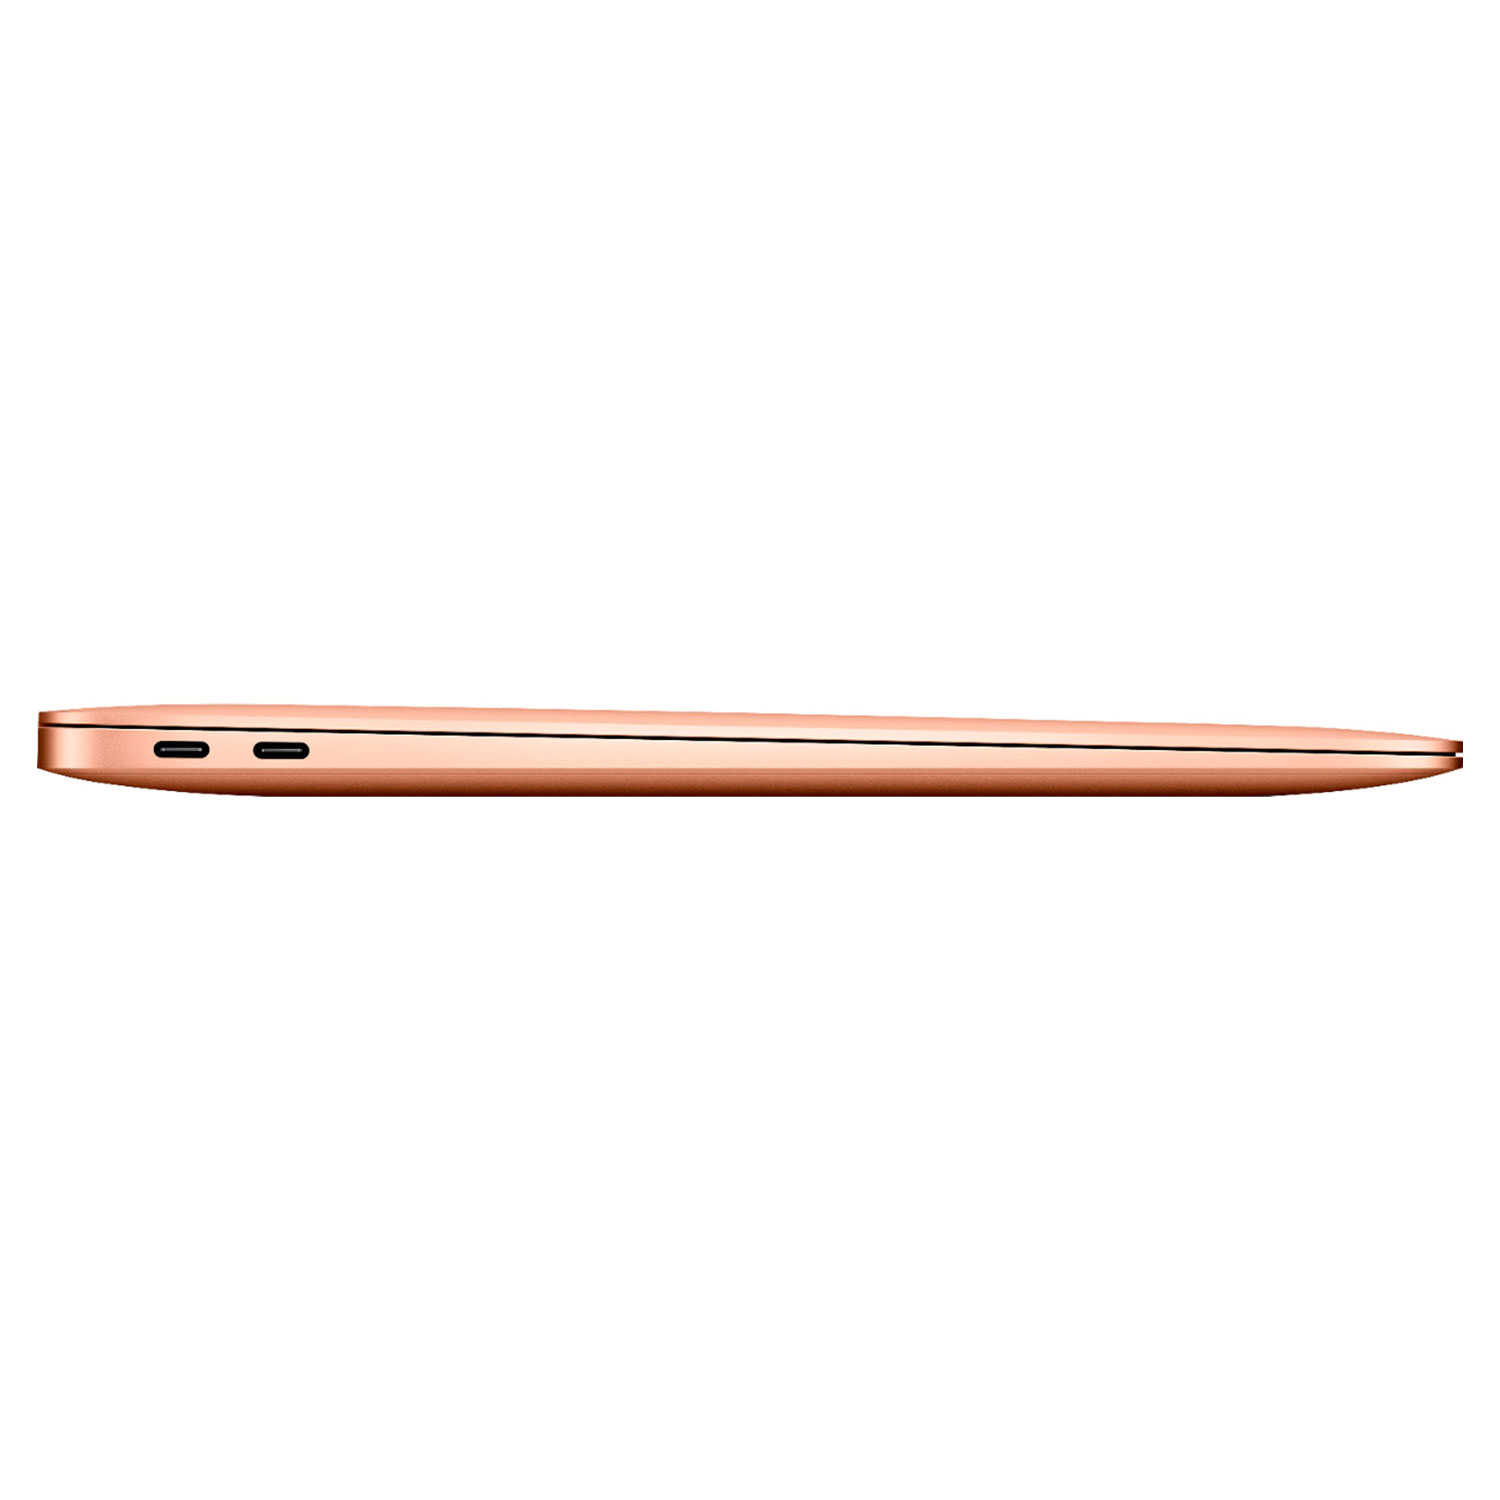 Apple Macbook Air Z12A0006C M1 / Memória RAM 8GB / SSD 256GB / Tela 13.3" - Gold (2020)
